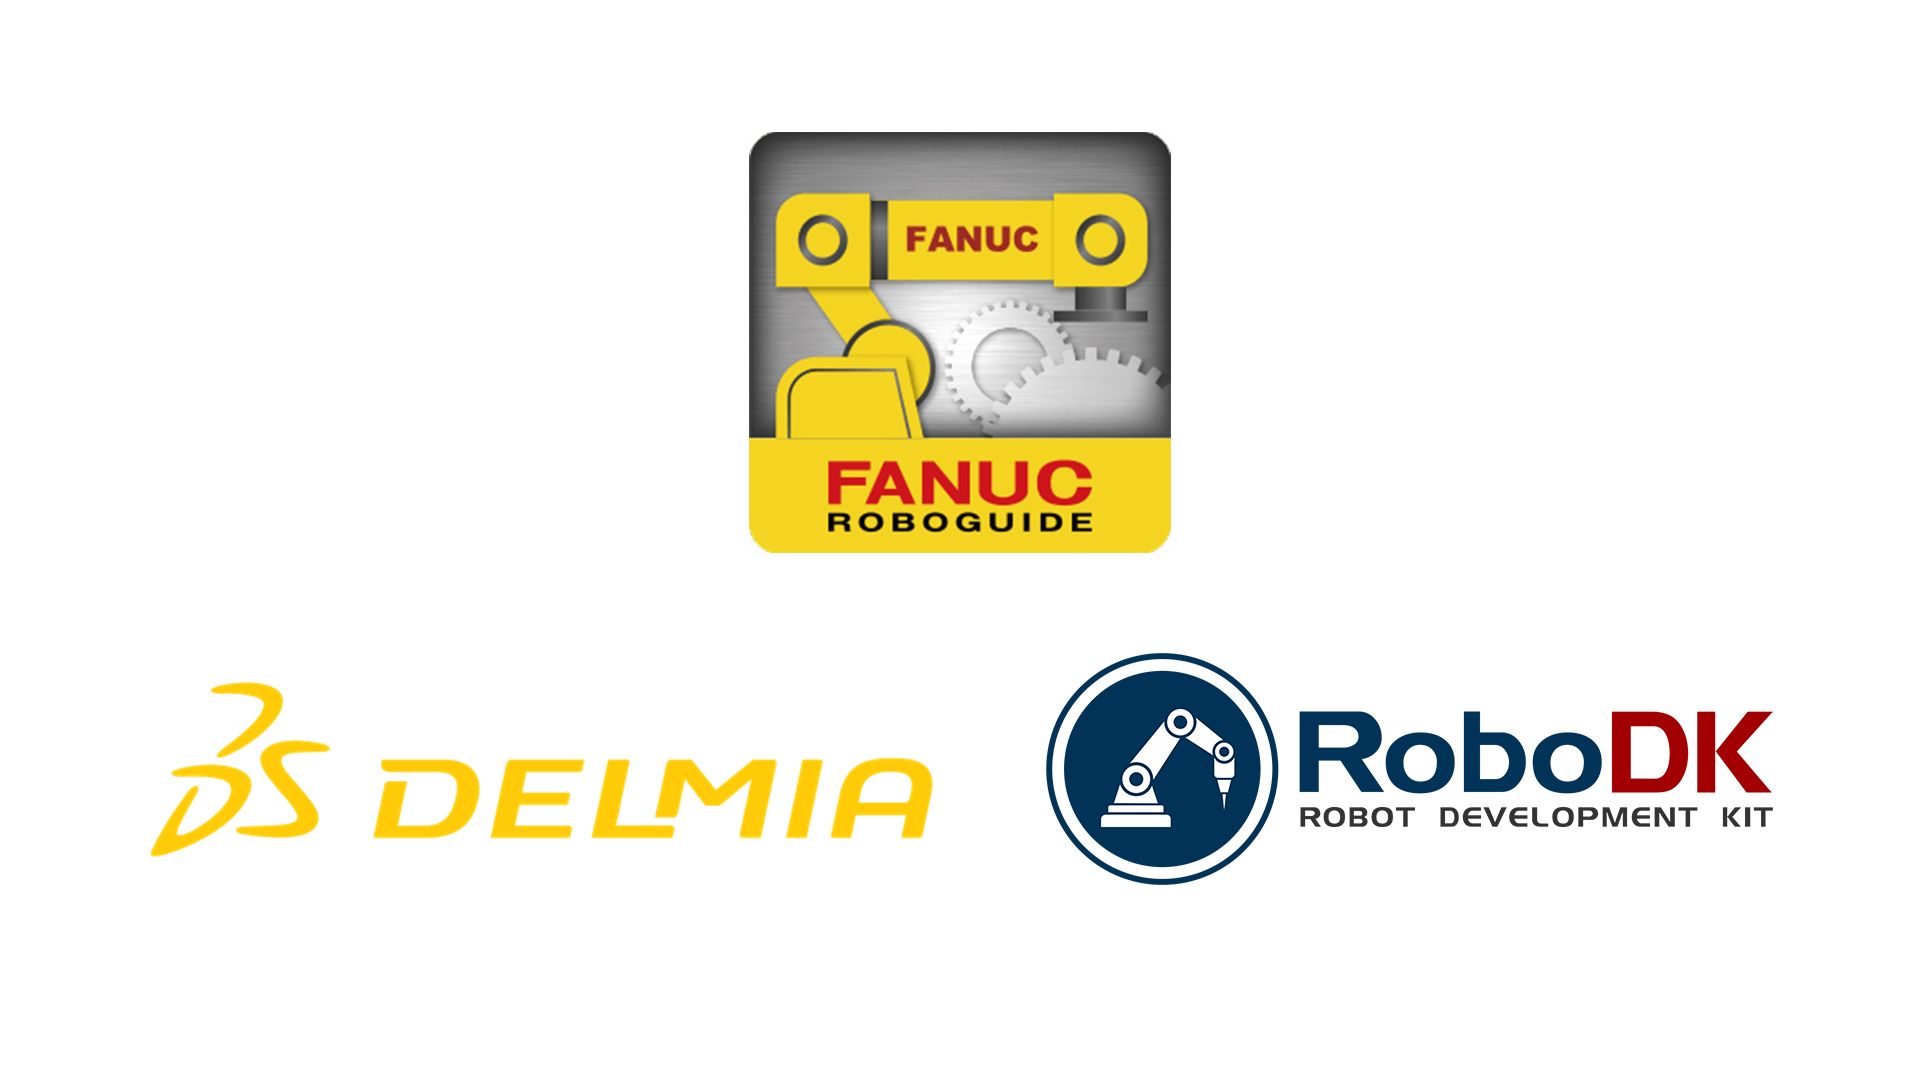 Aerobotix provides system deliverables for the following programs: FANUC Roboguide, Delmia, and RoboDK.